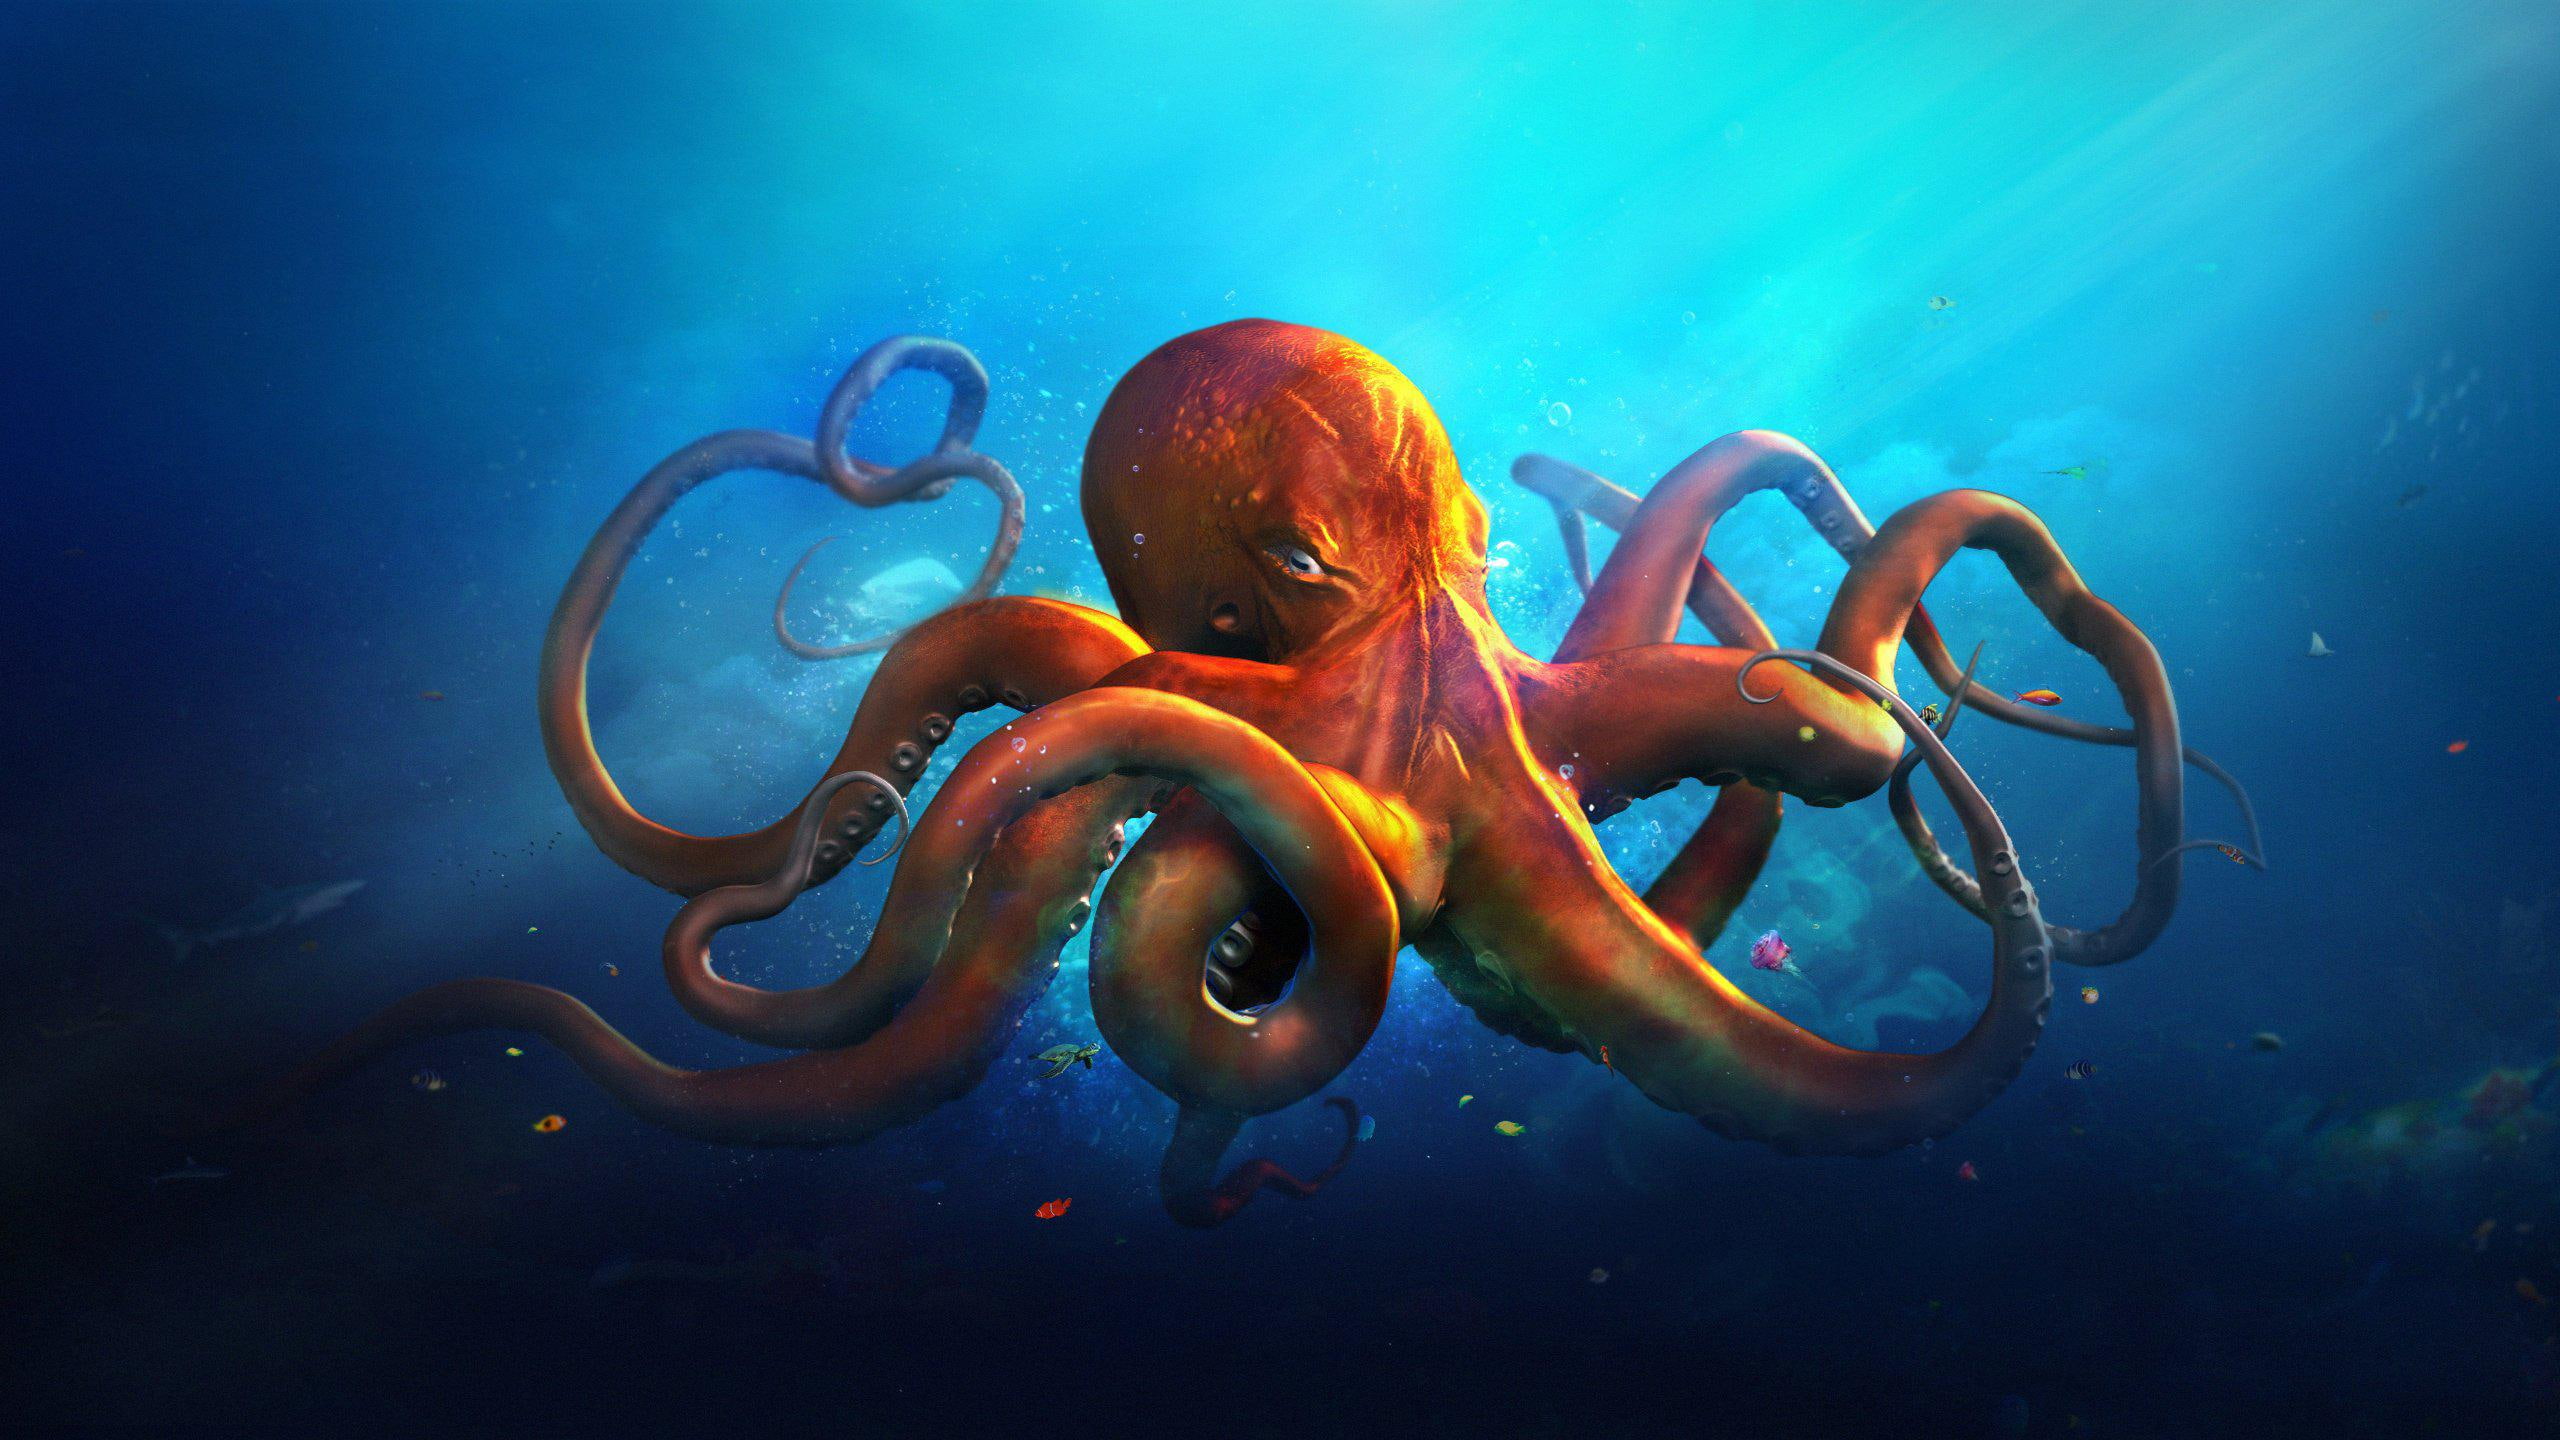 Underwater World Animals Octopus Ocean Sea Fantasy Artwork Art HD 1080p, orange octopus illustration